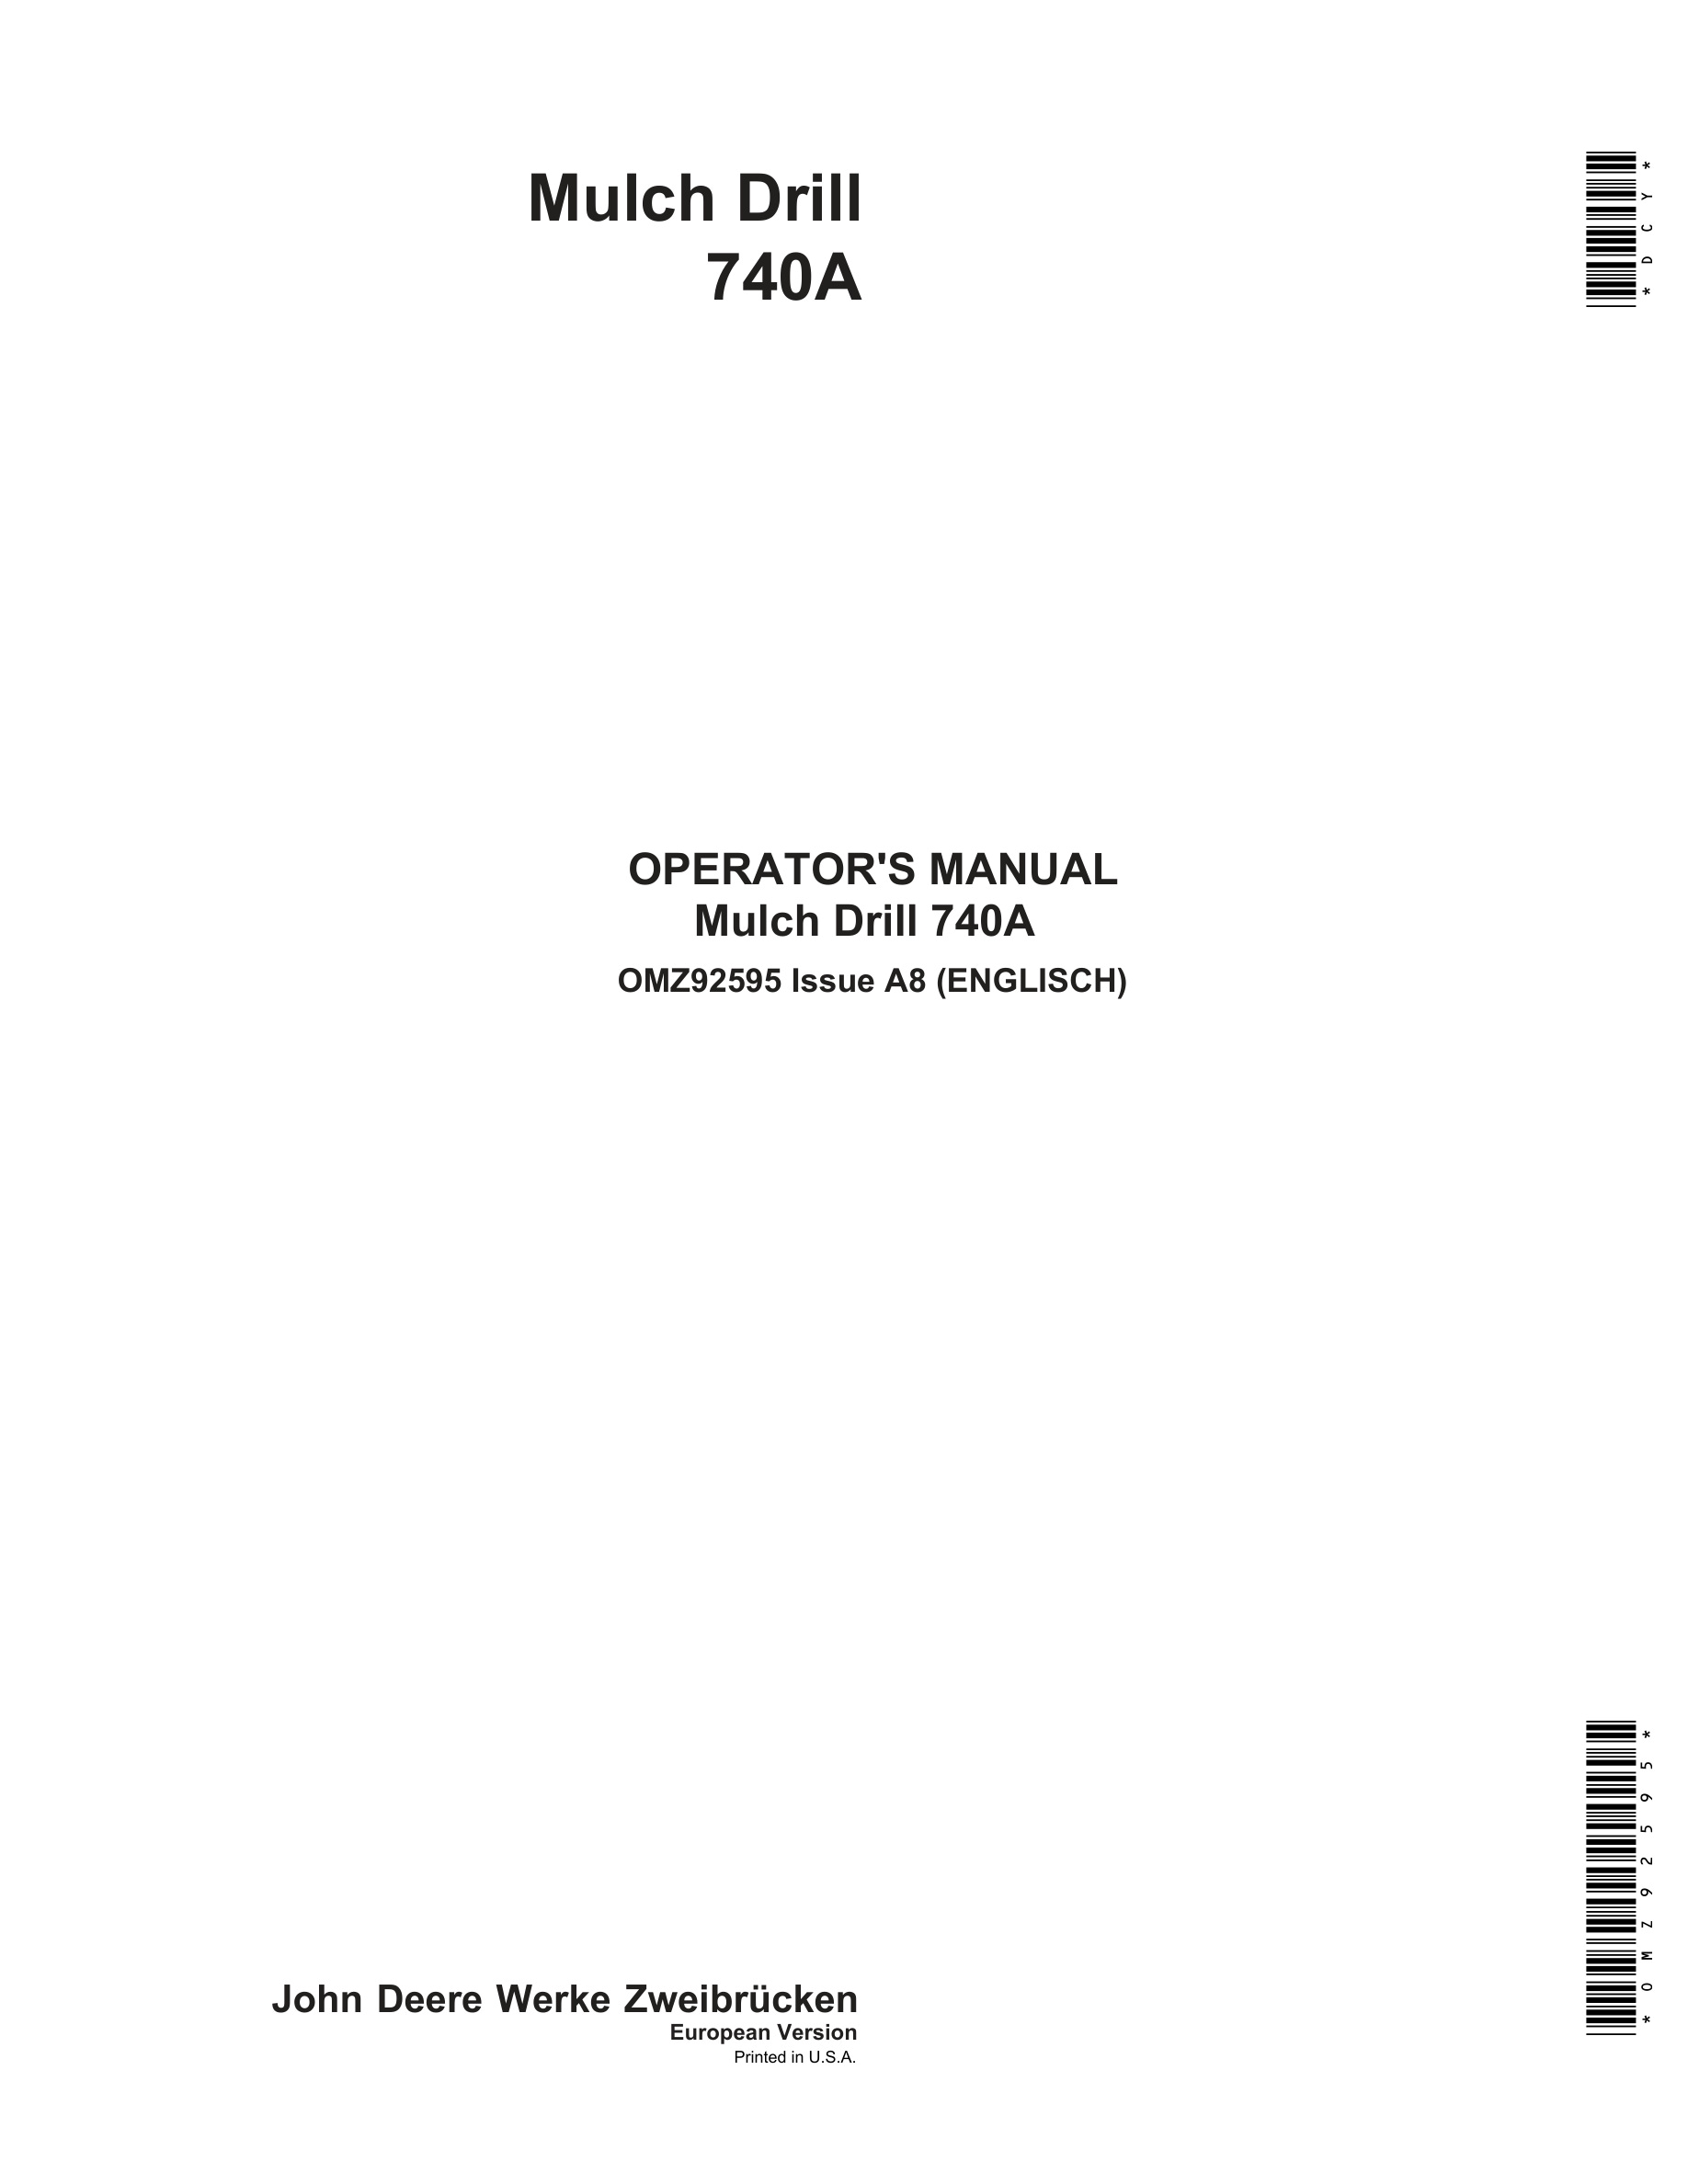 John Deere 740A Mulch Drill Operator Manual OMZ92595-1